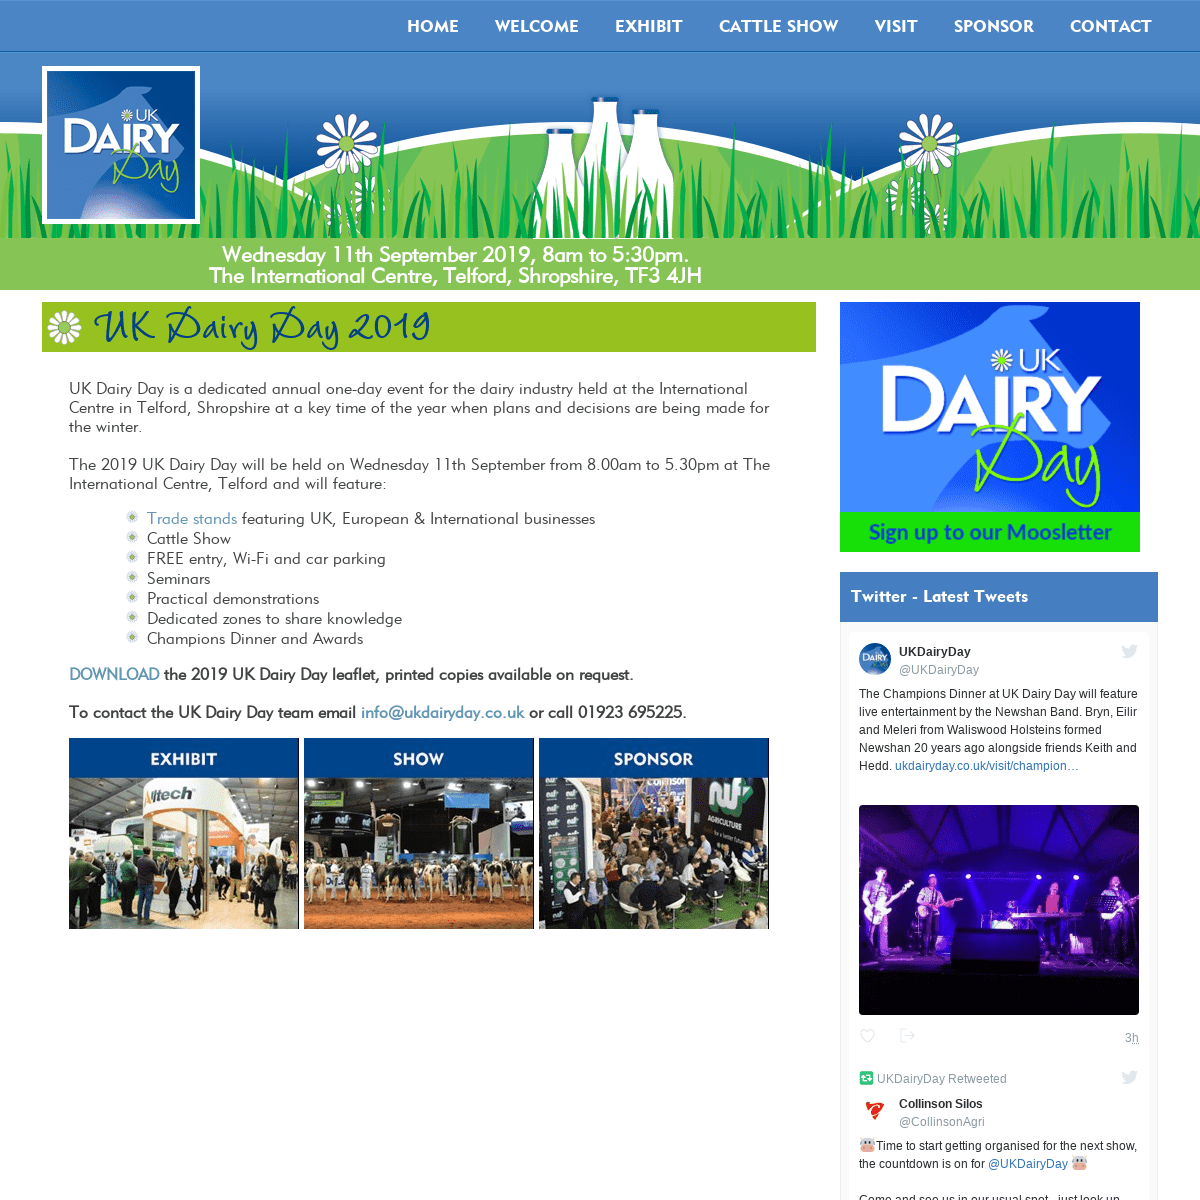 UK Dairy Day - UK Dairy Day